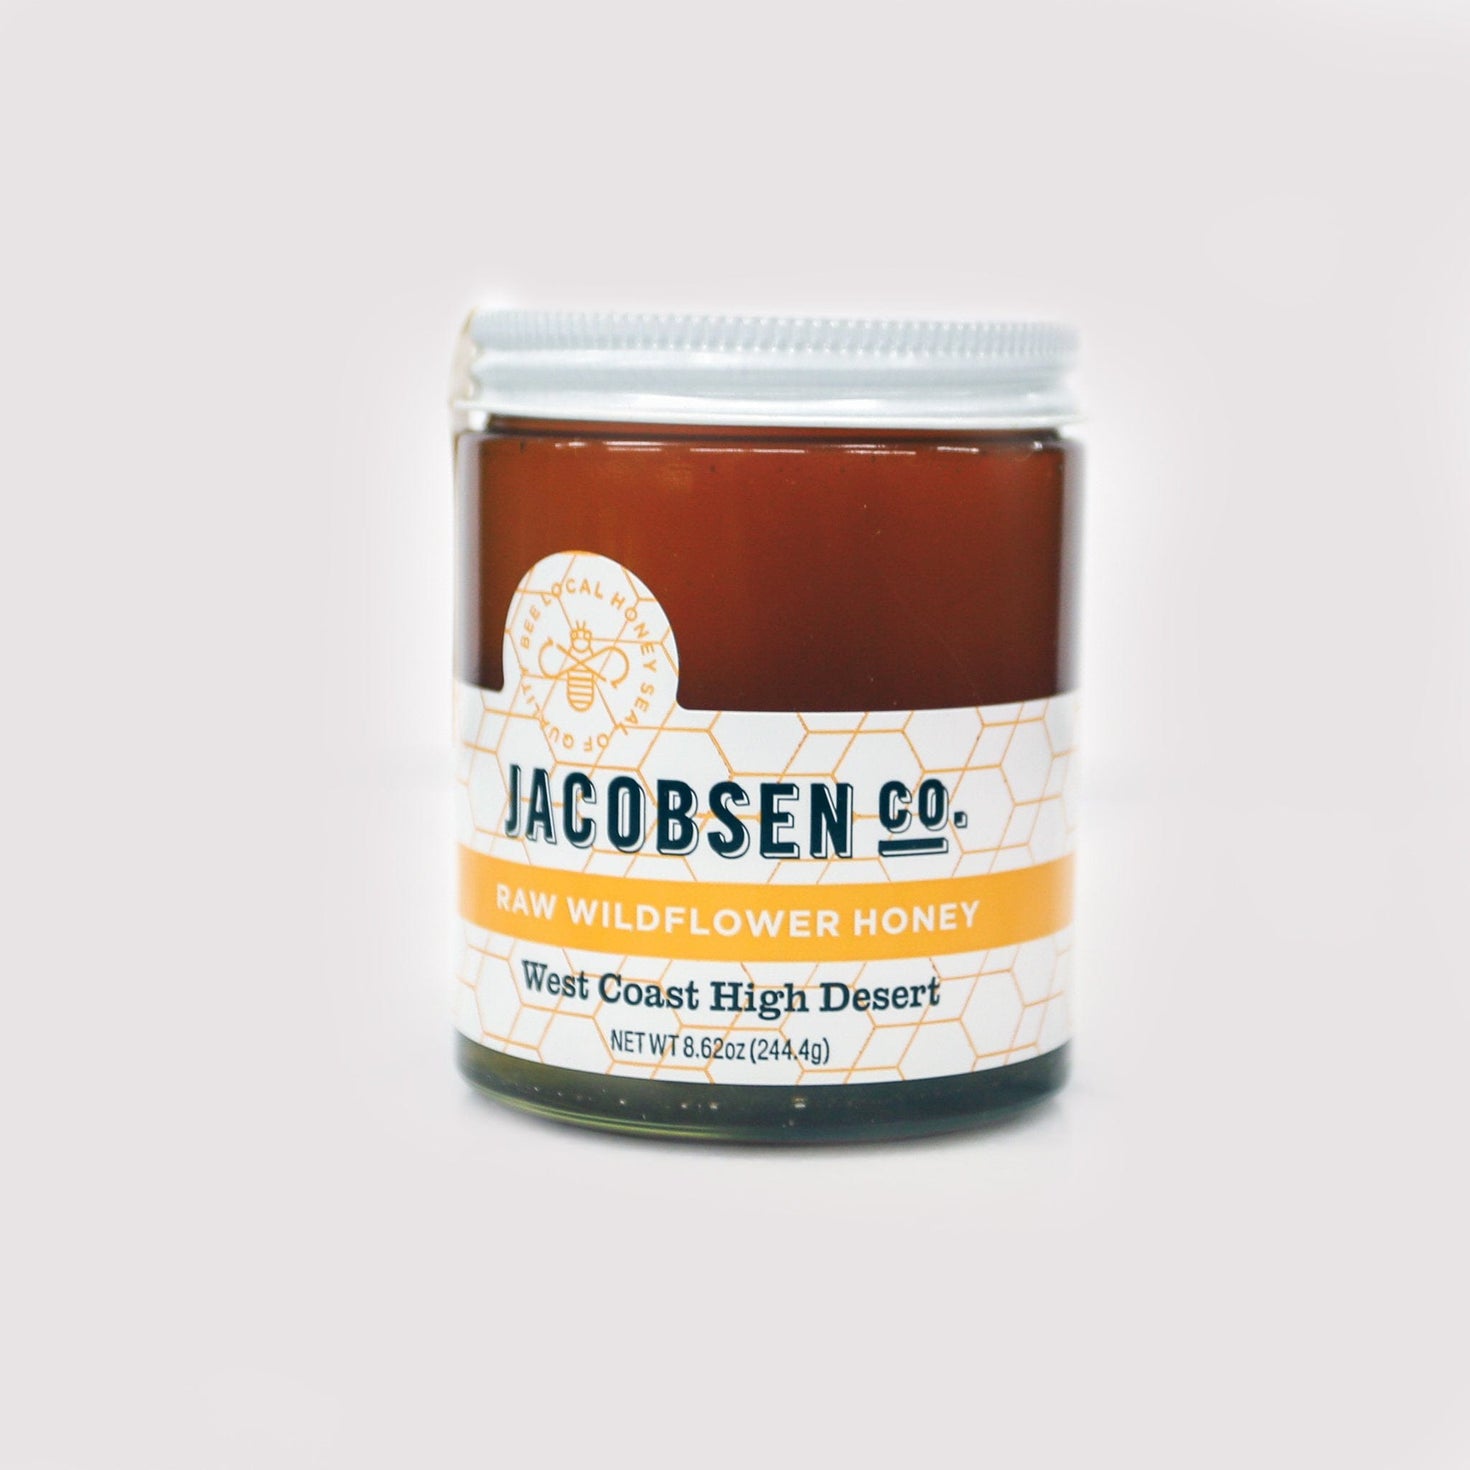 Jacobsen Honey: Raw Wildflower Honey 8.62oz